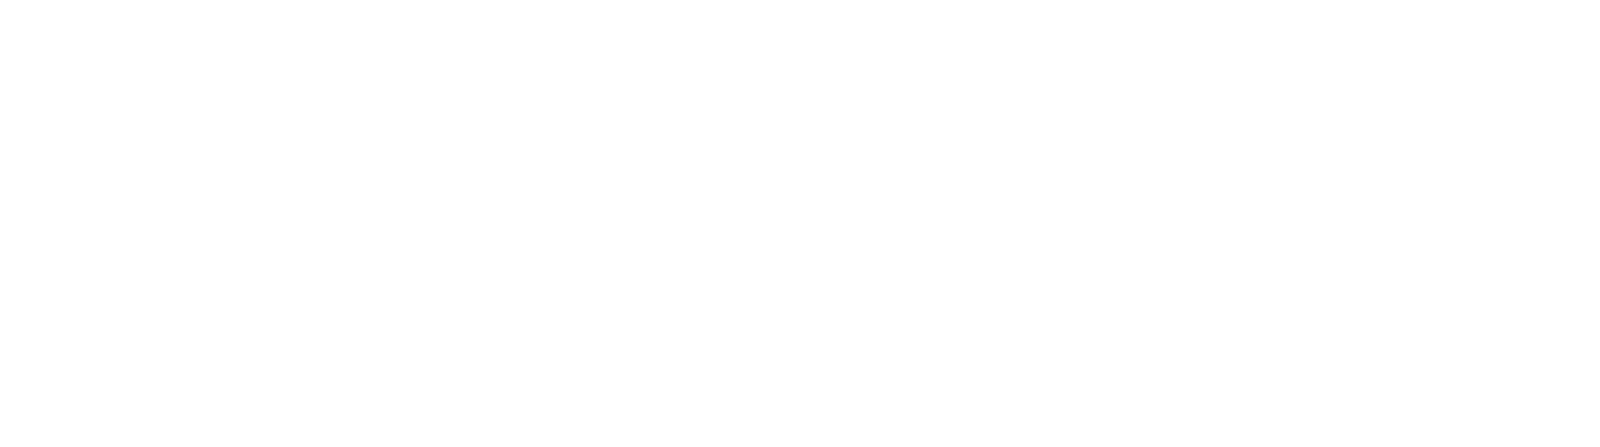 Gogoro logo large for dark backgrounds (transparent PNG)